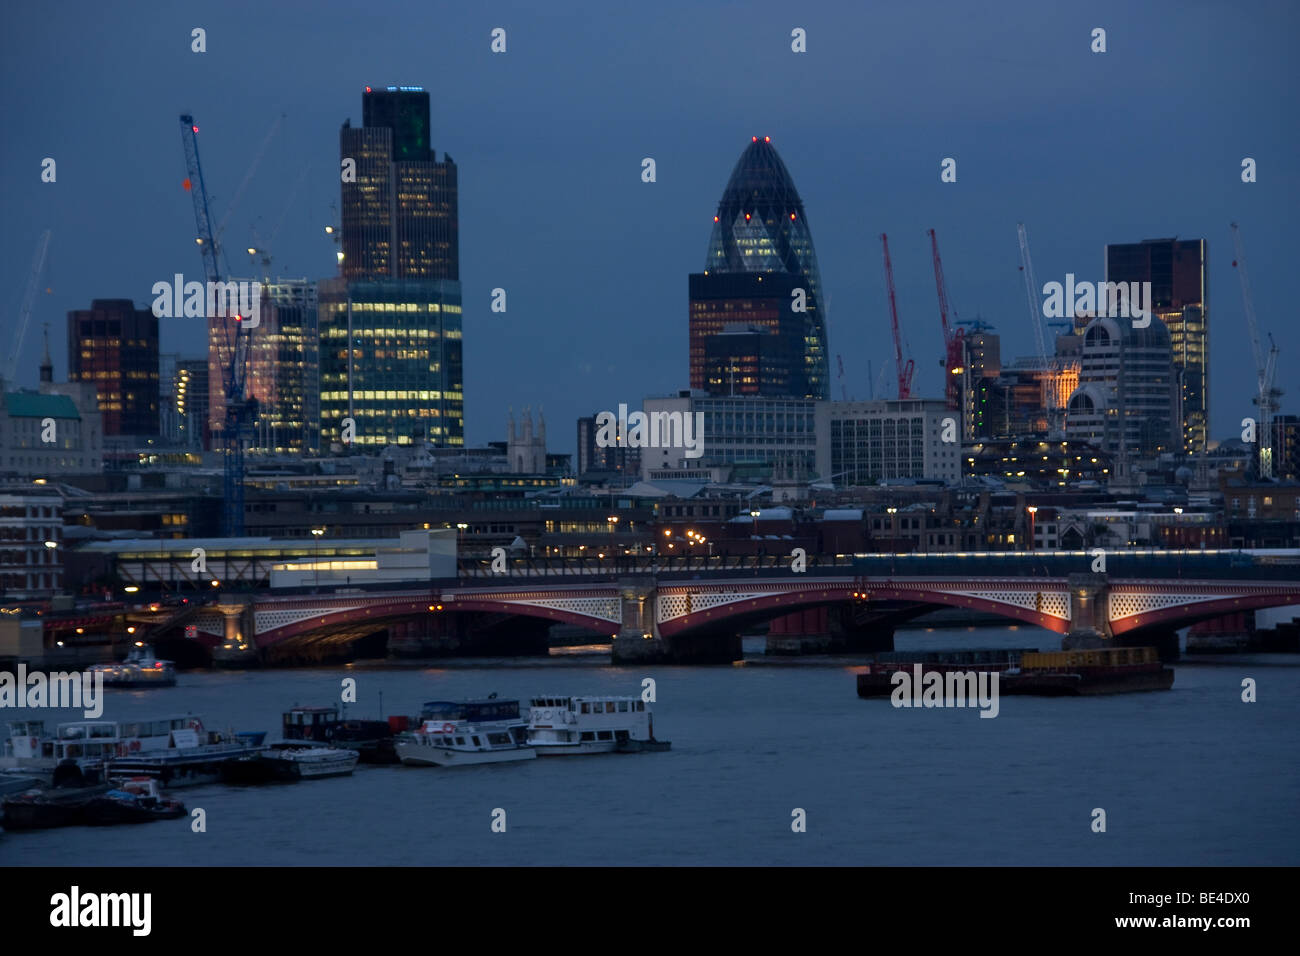 night landscape from london Stock Photo